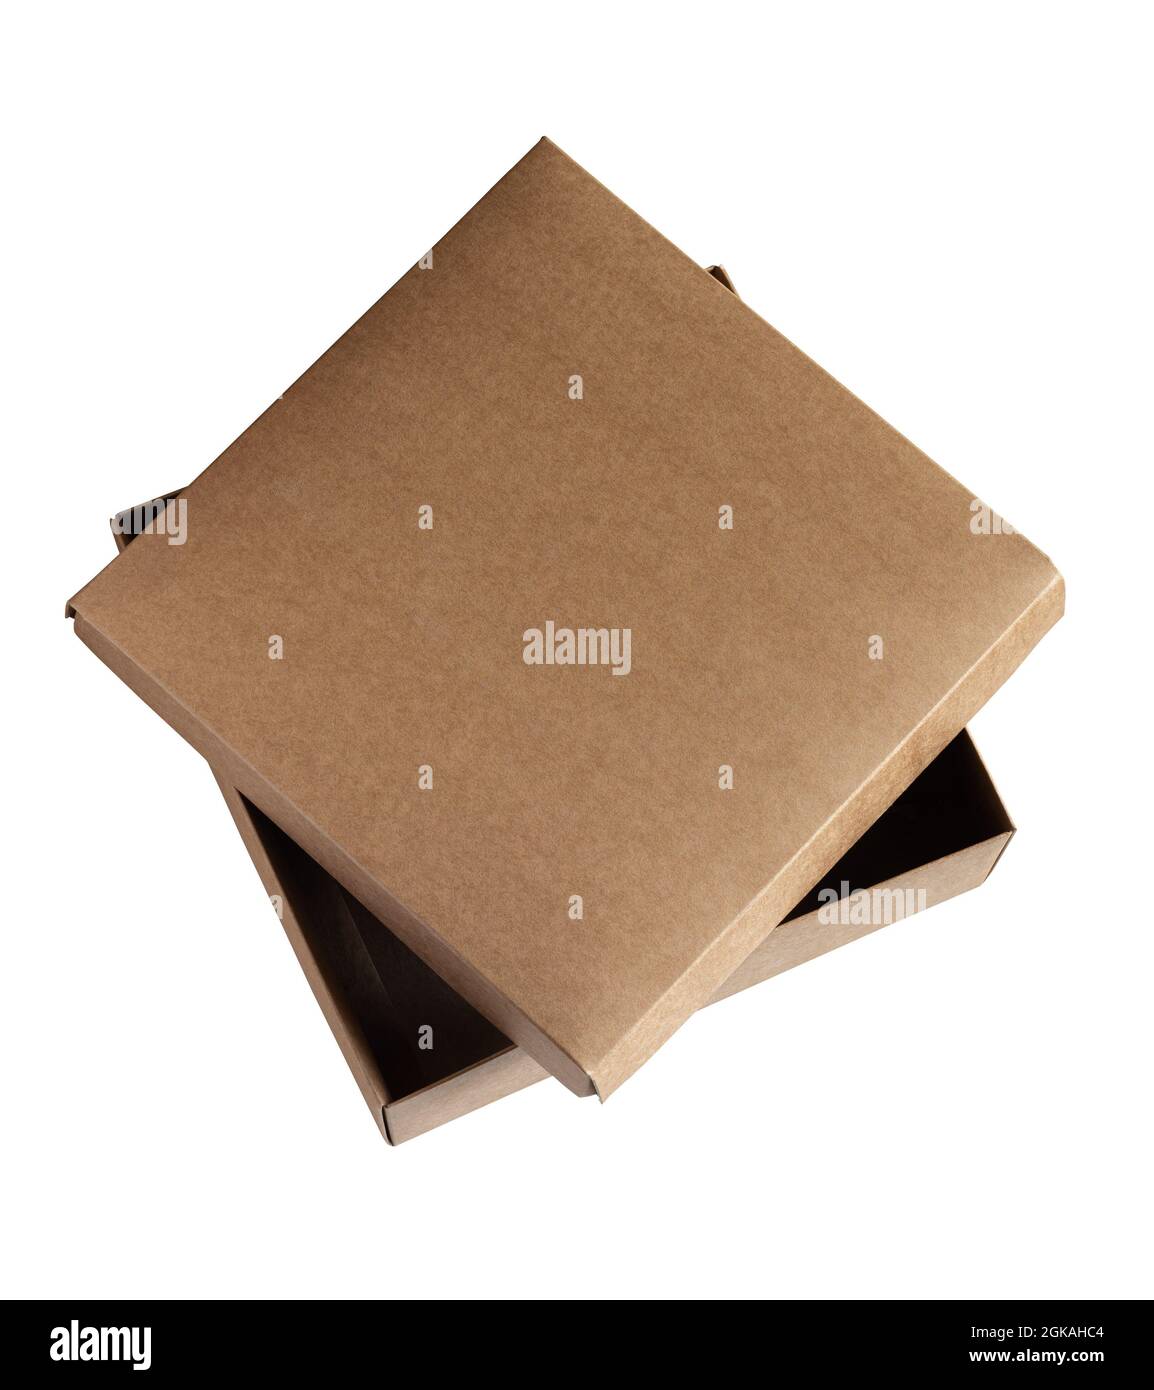 Open cardboard box isolated on white background Stock Photo